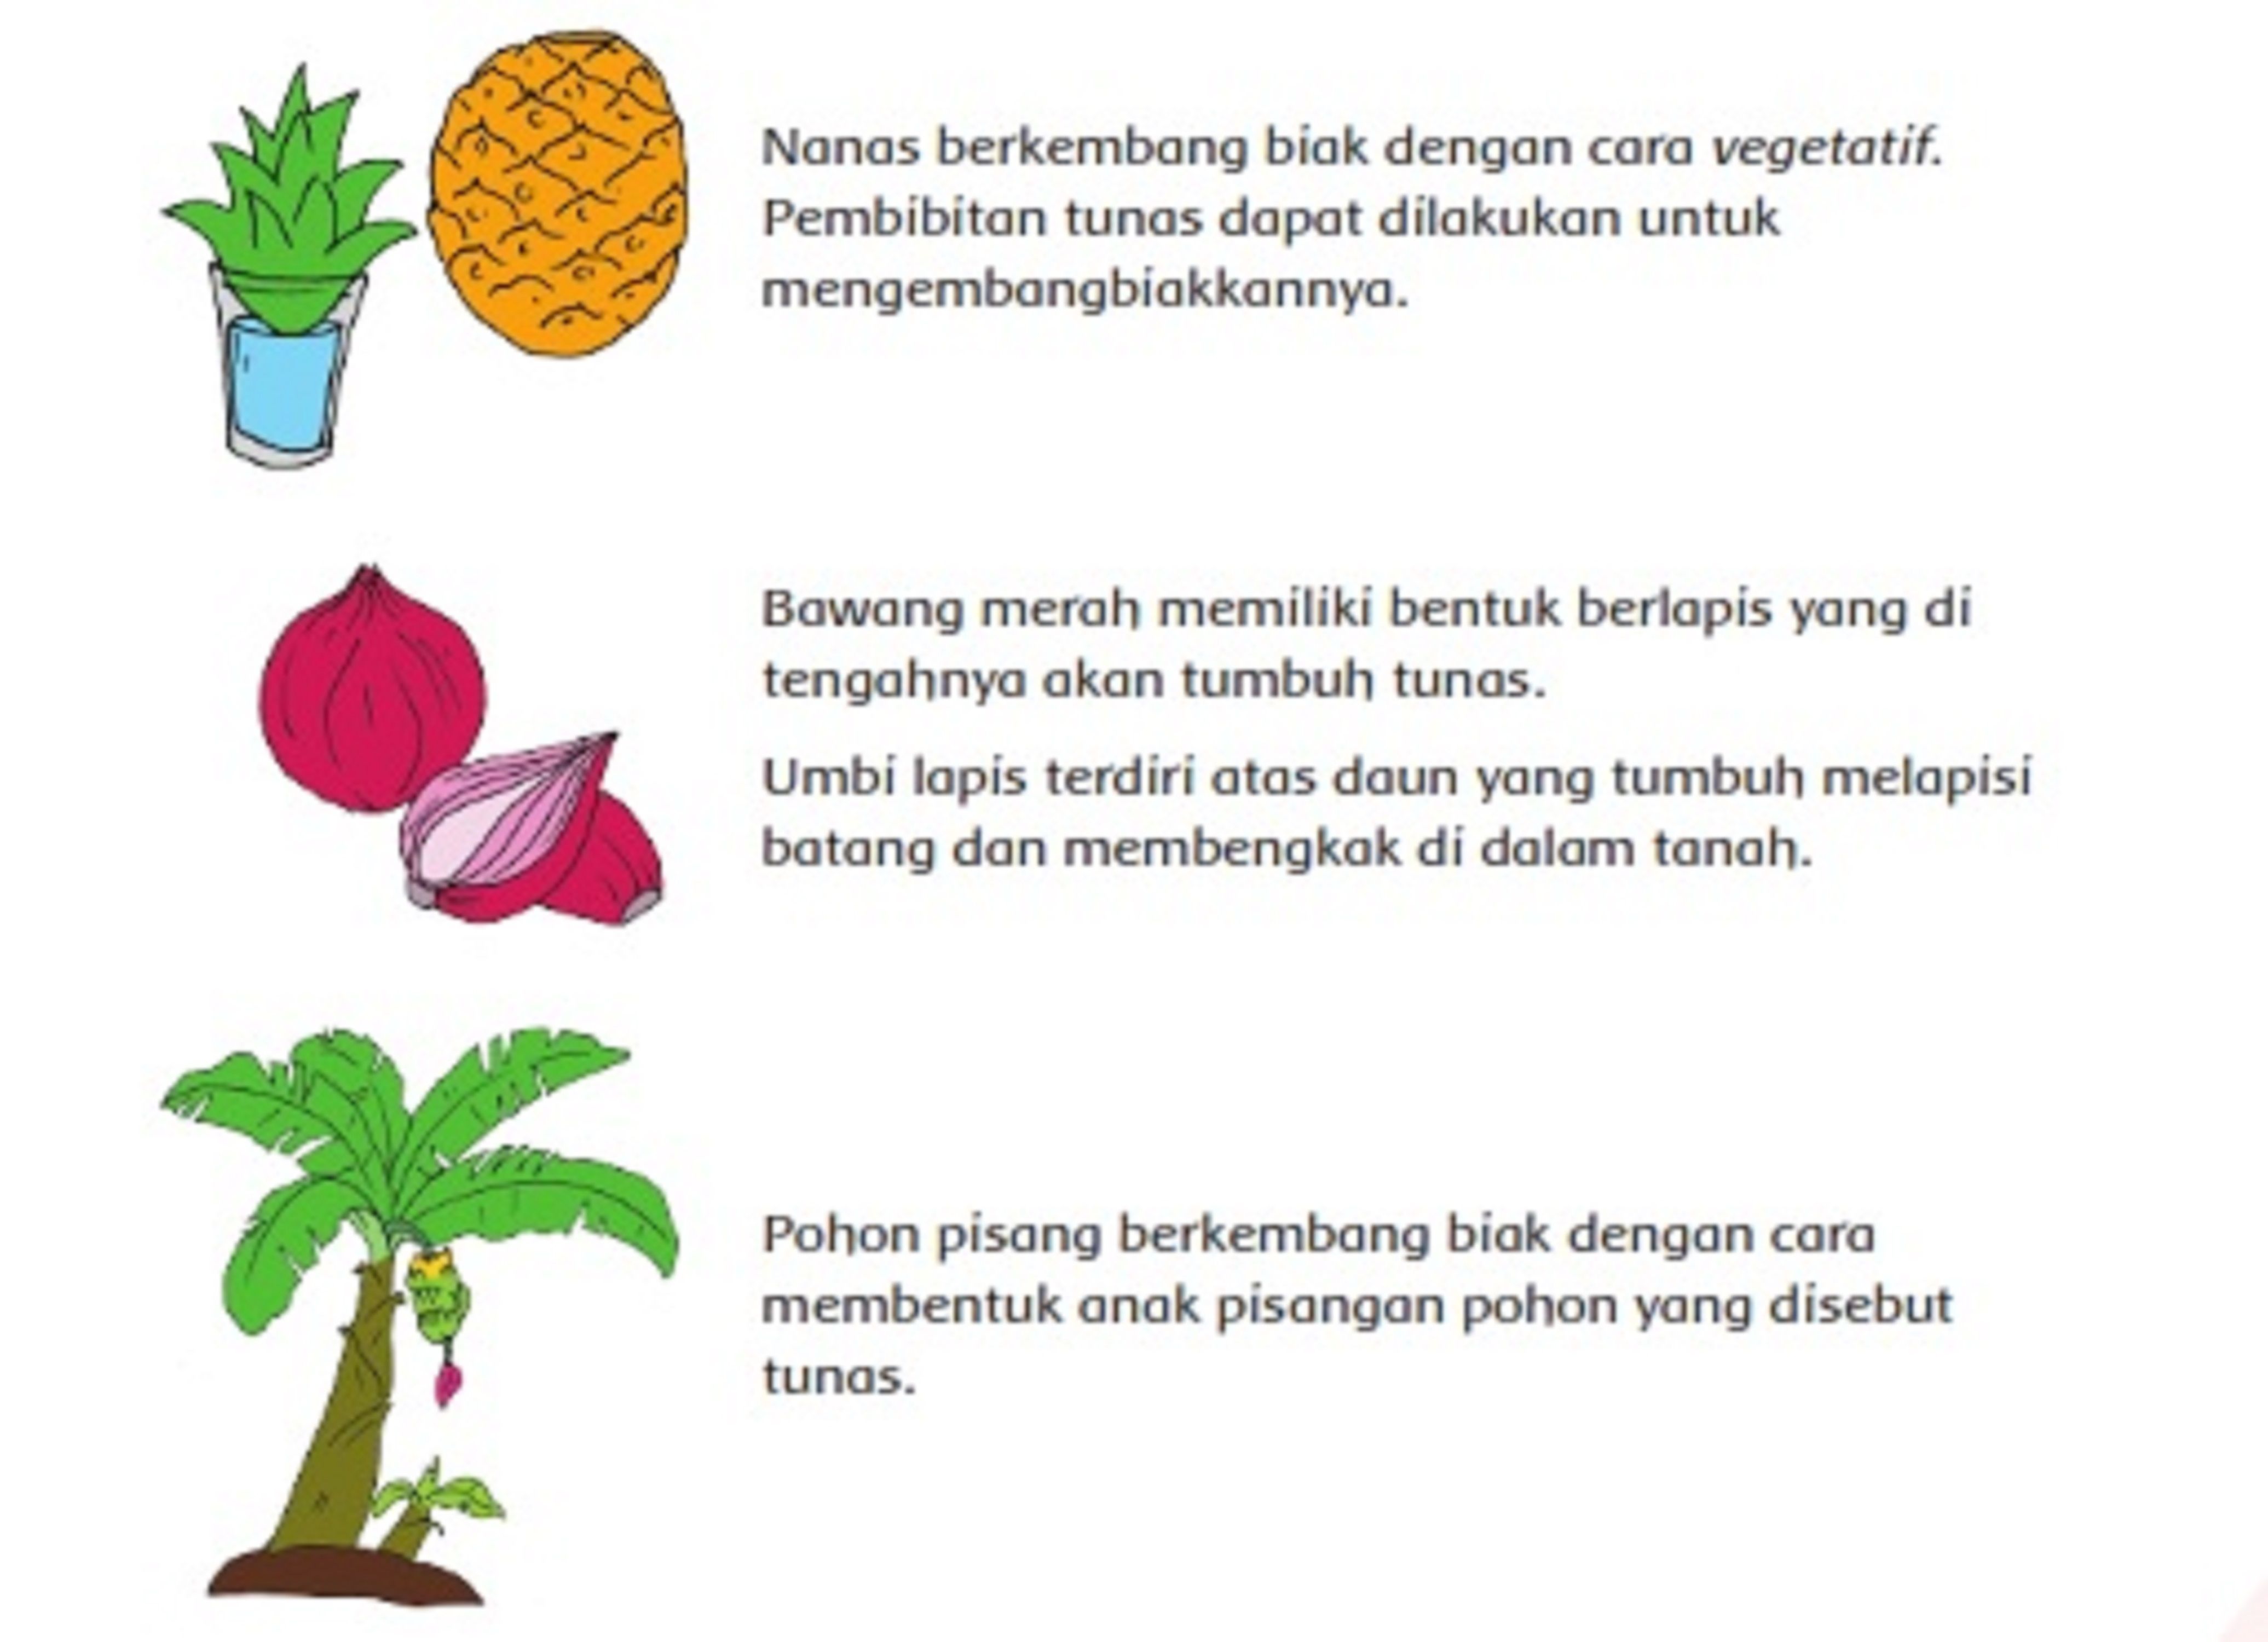 Daftar Jenis Tanaman Dan Cara Berkembang Biak Contoh Tanaman Yang Berkembang Biak Dengan Cara Vegetatif Seputar Lampung